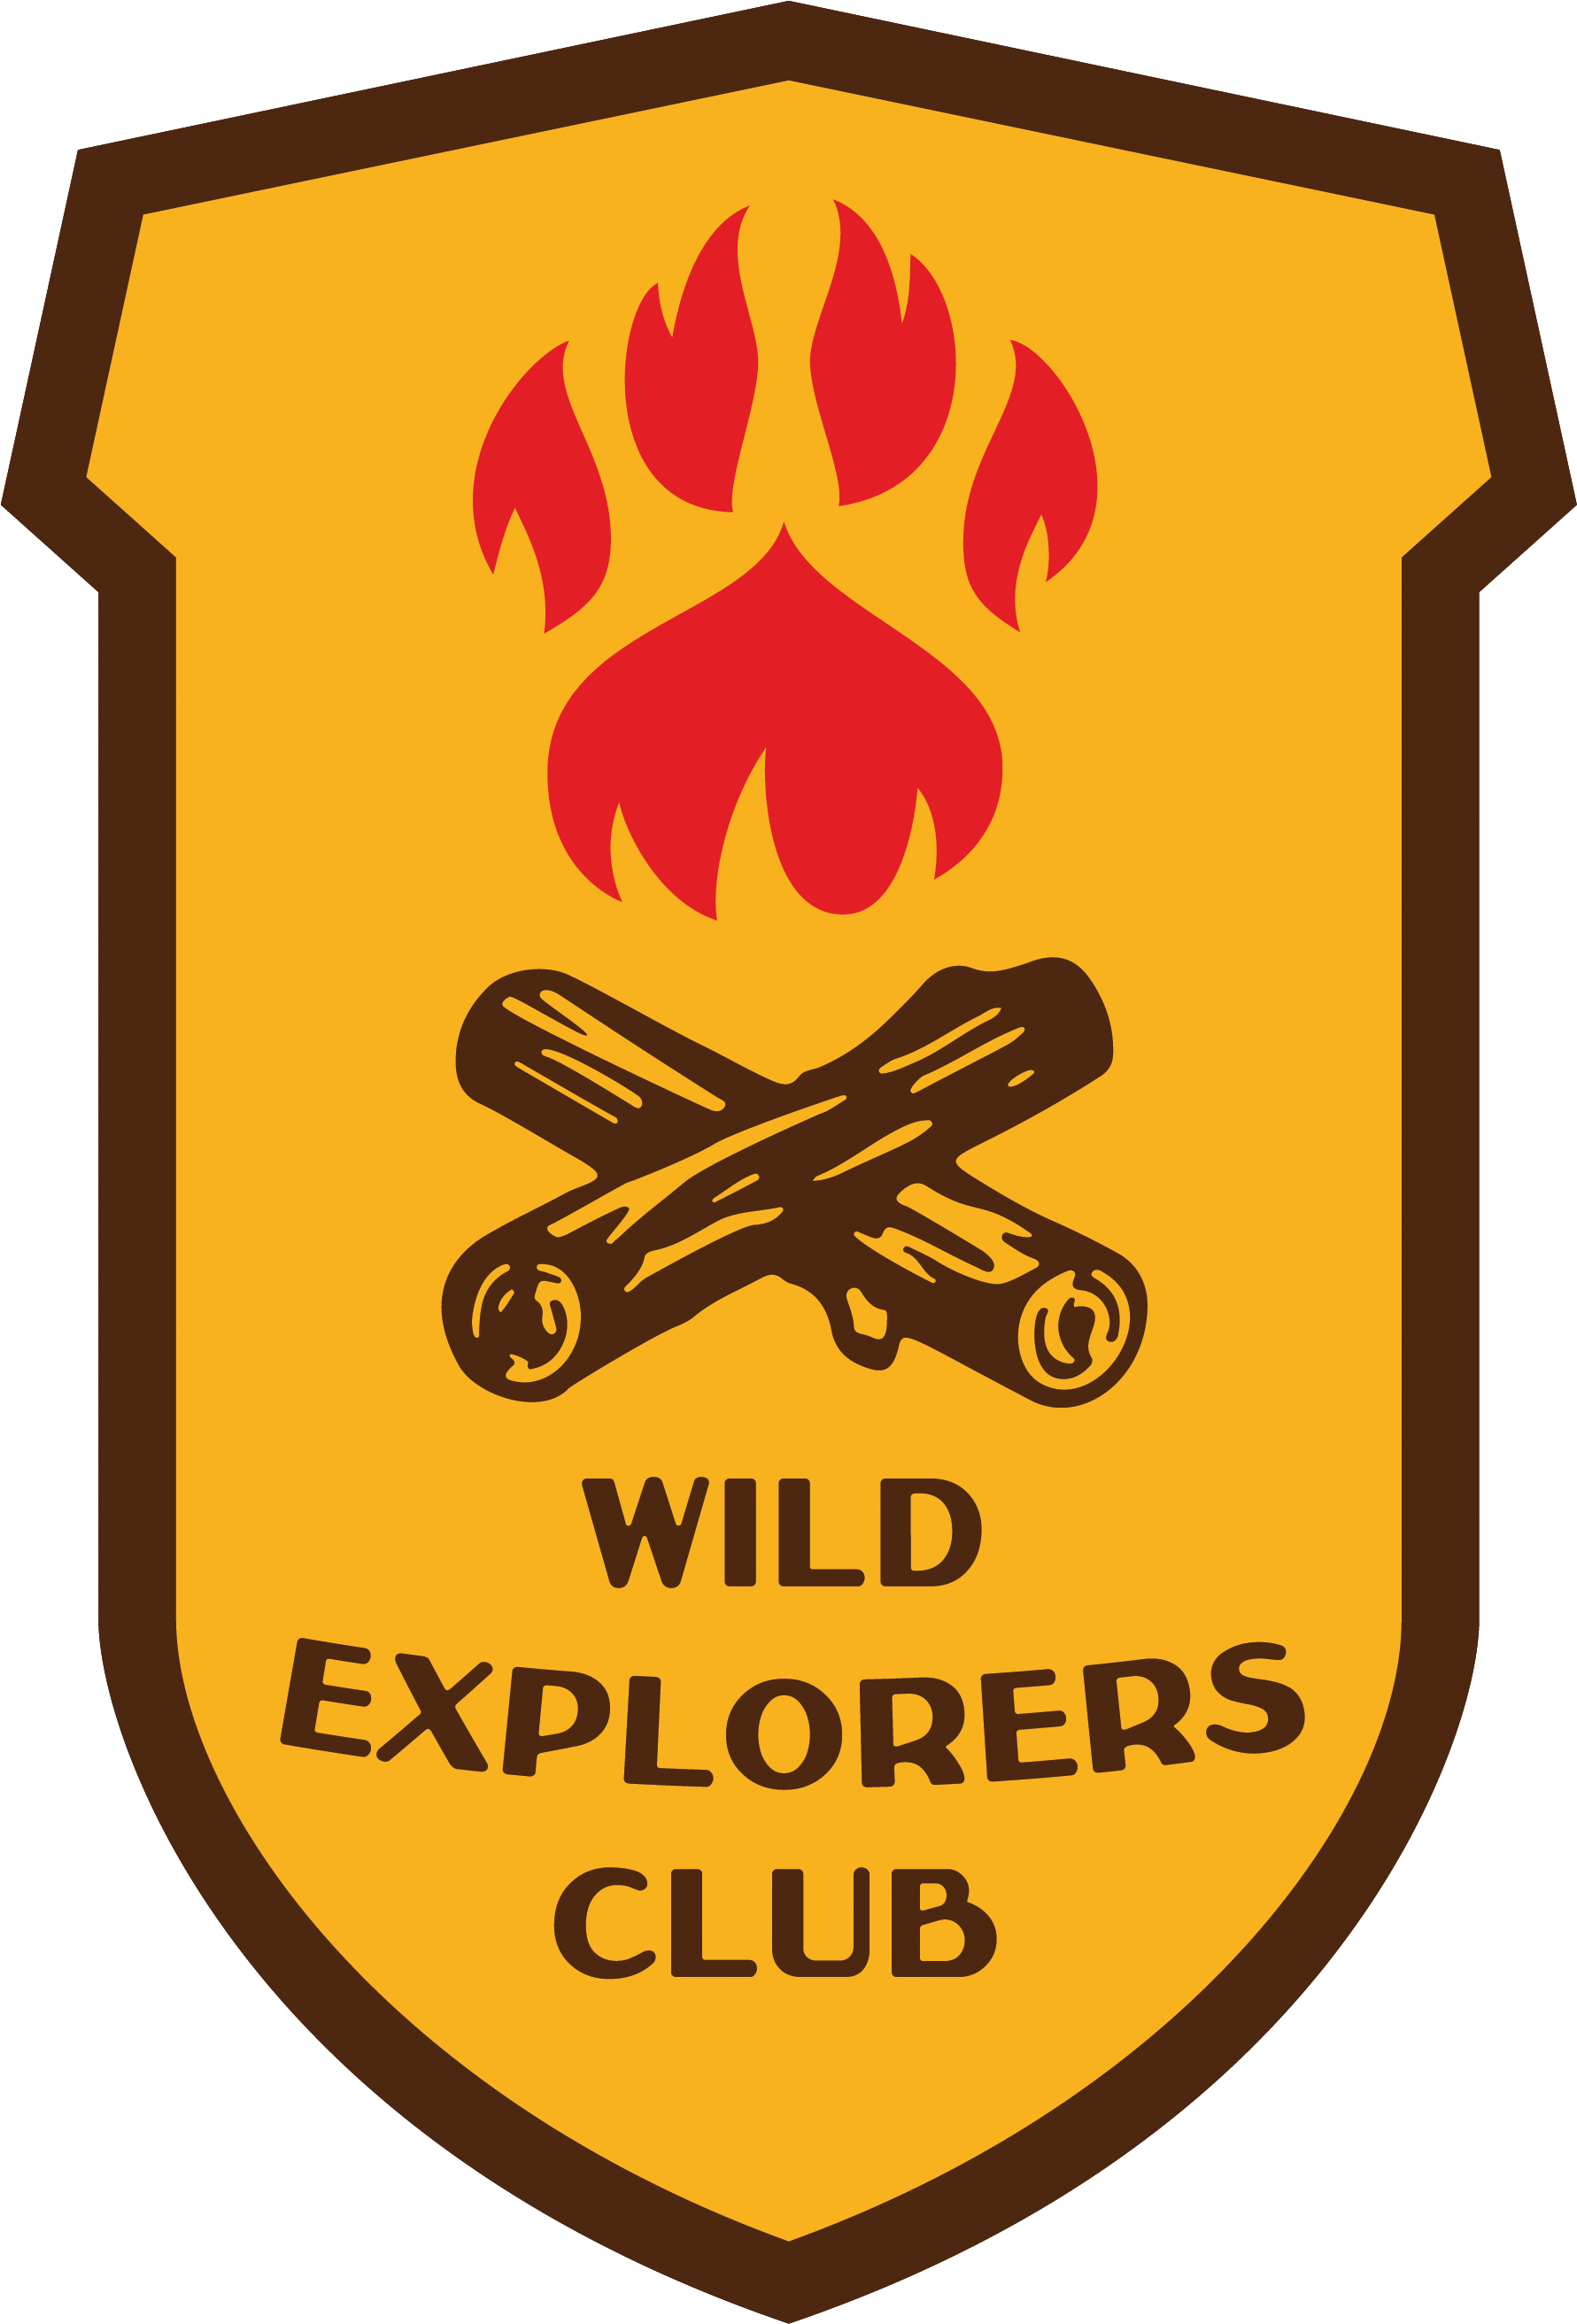 The Flash Flood Wild Explorers Club Logo - Wild Explorers Club (2830x2830), Png Download